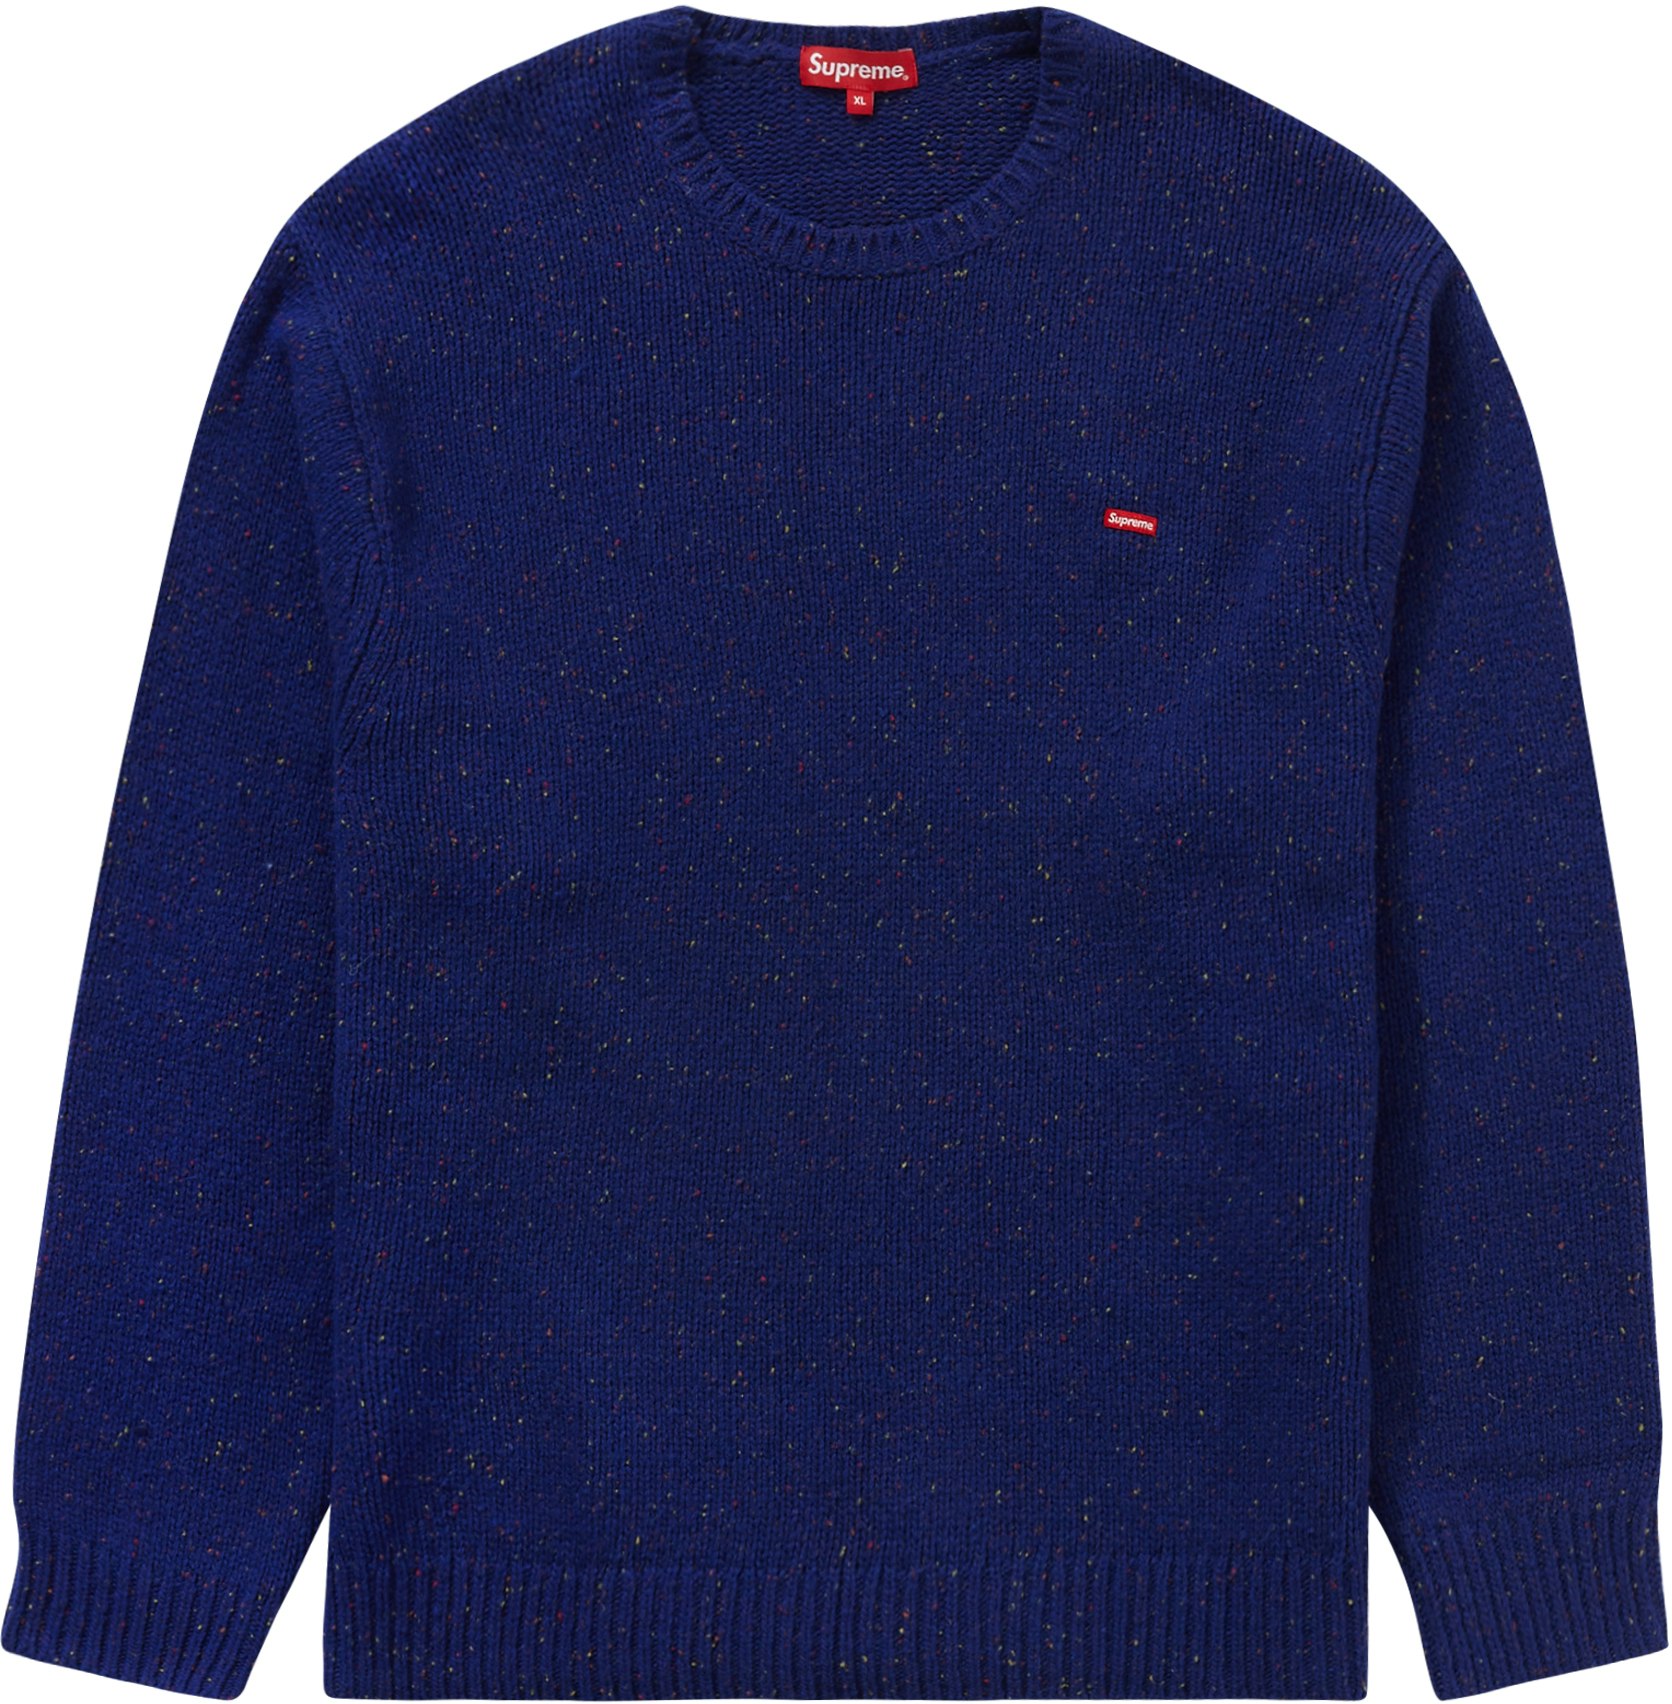 Supreme Small Box Speckle Sweater Royal - Novelship